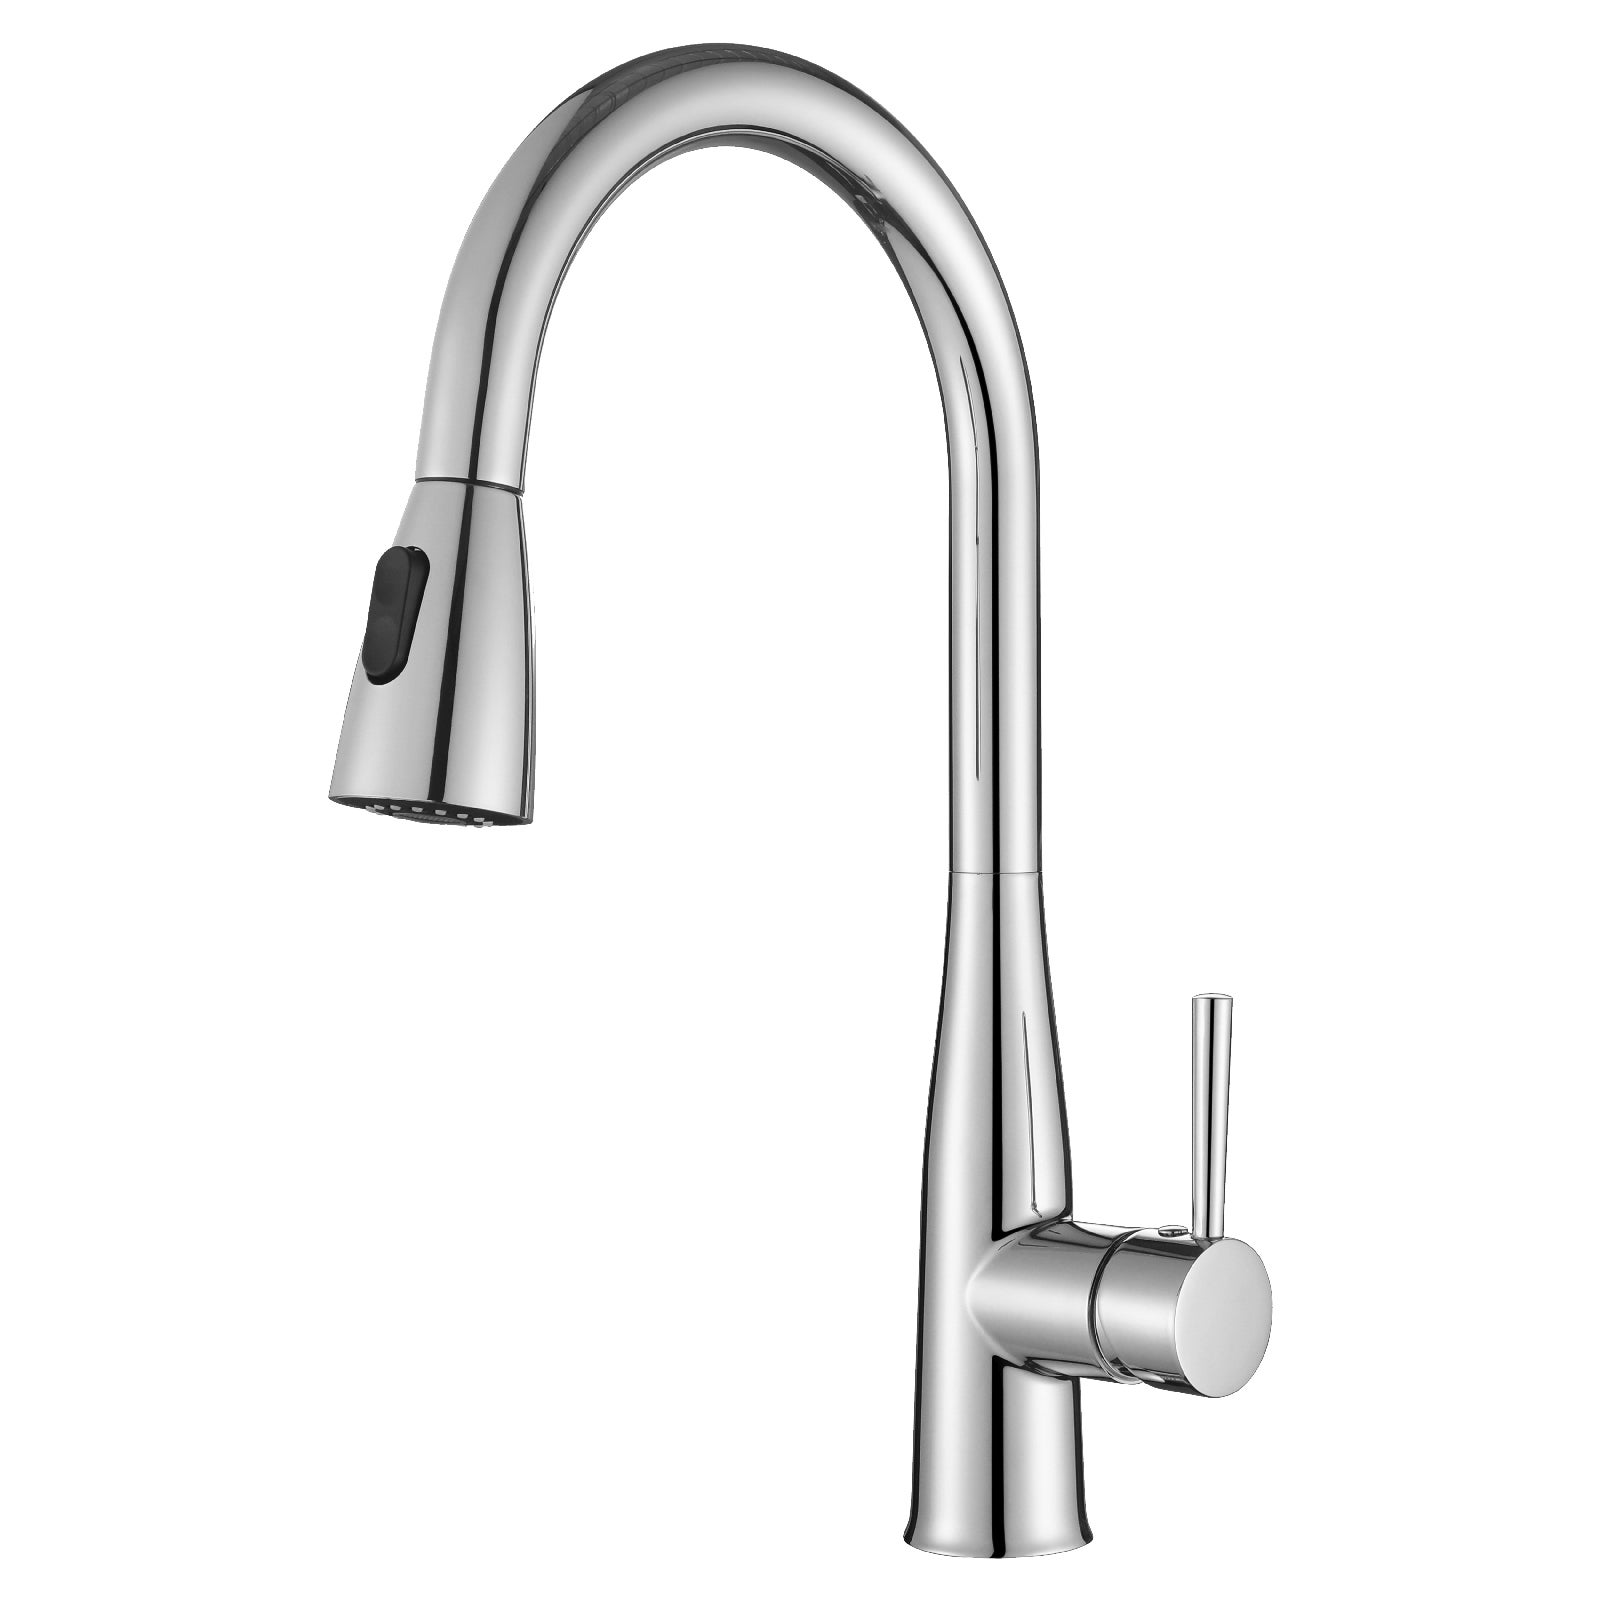 Decaura Pull Down Kitchen Tap Mixer Basin Taps Faucet Swivel Spout Brass Chrome 2-Way